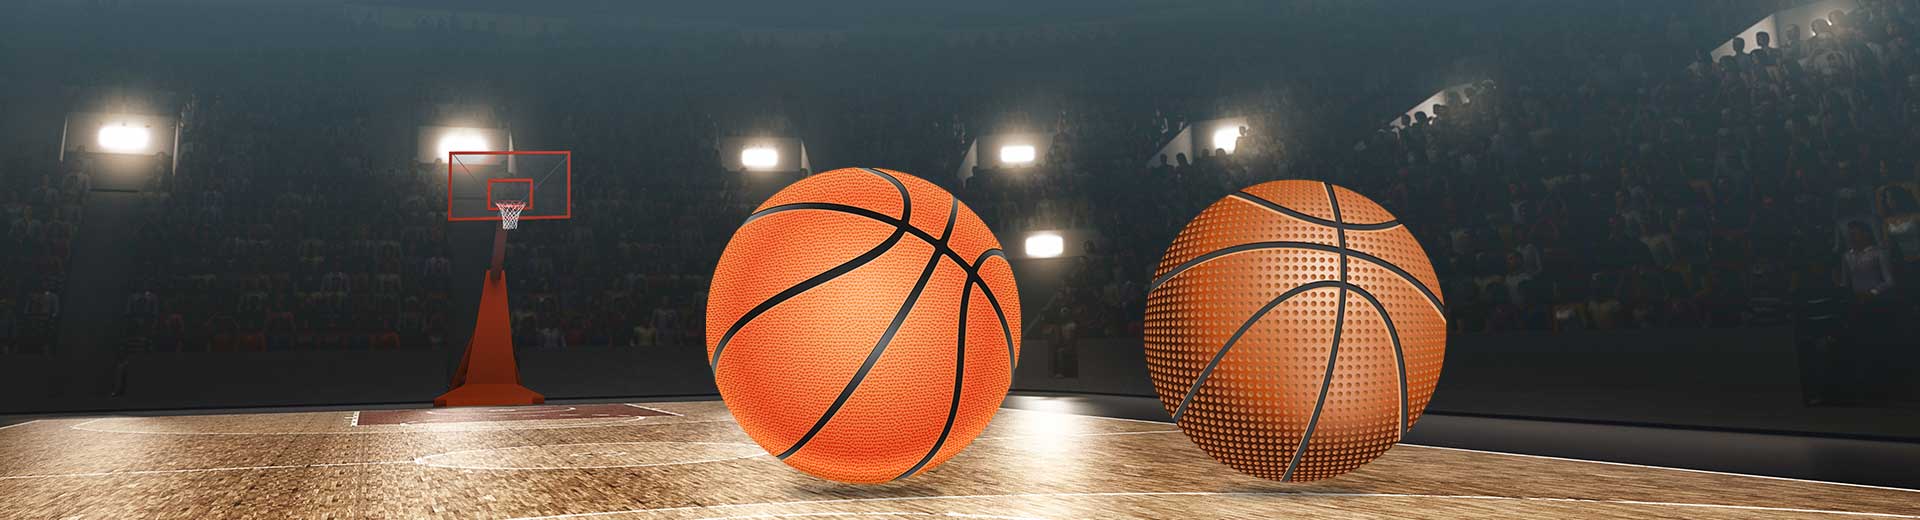 Basketballs Manufacturers in Grasse